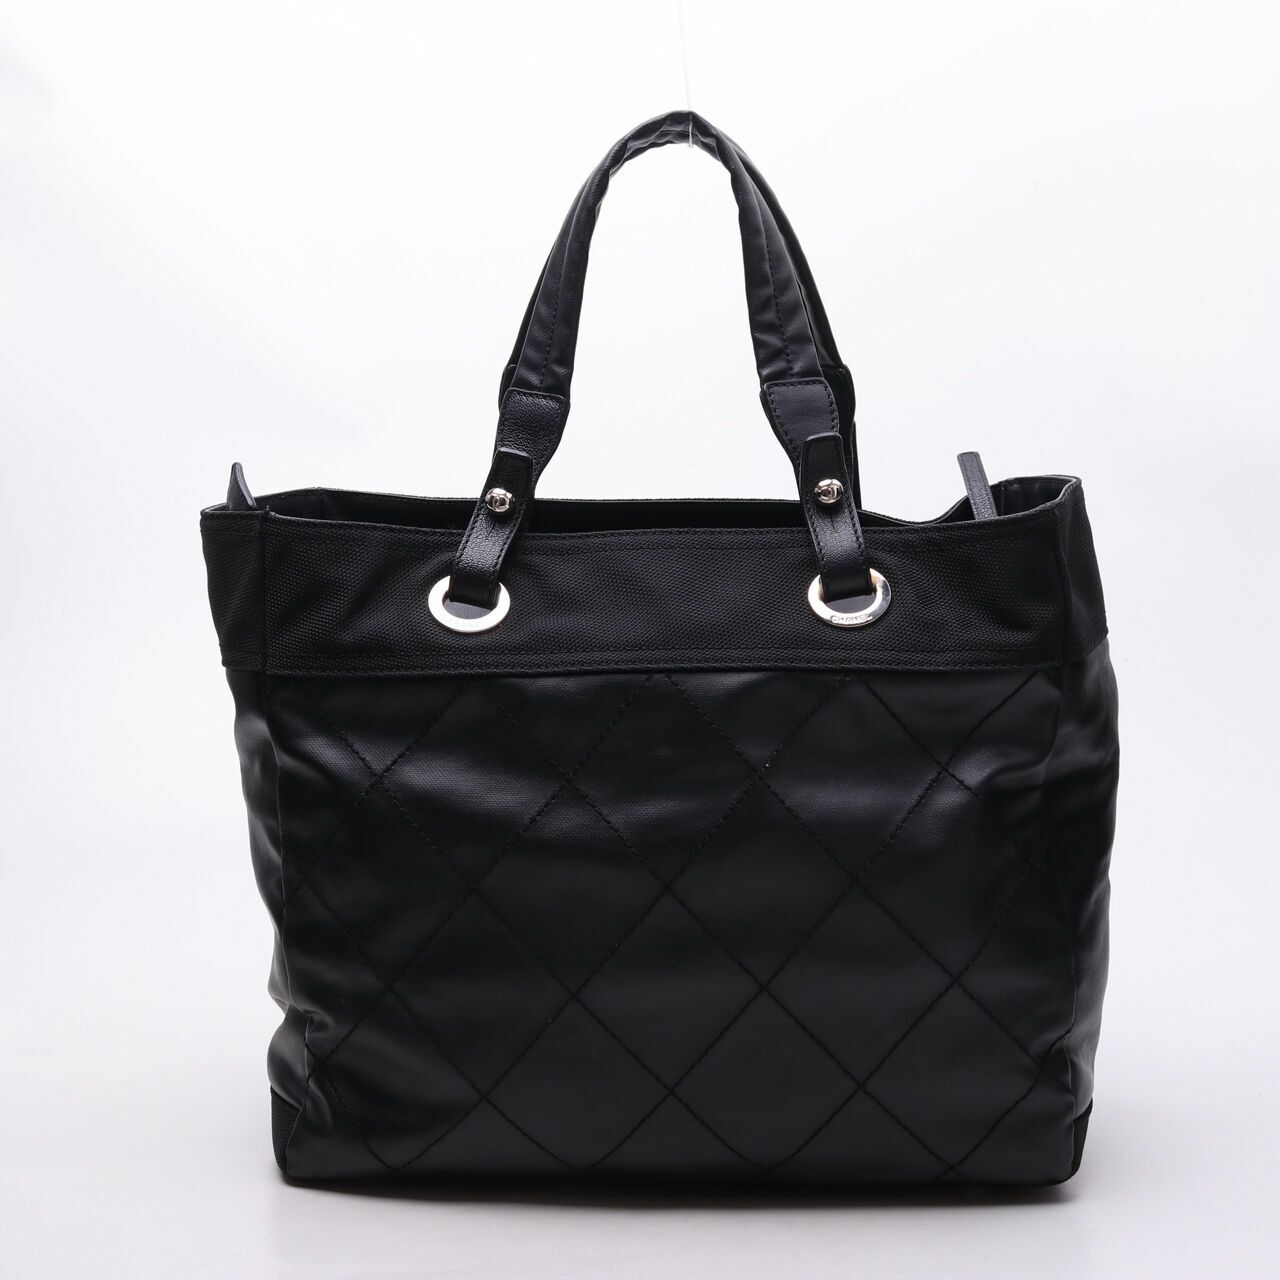 Chanel Biarritz Black Tote Bag